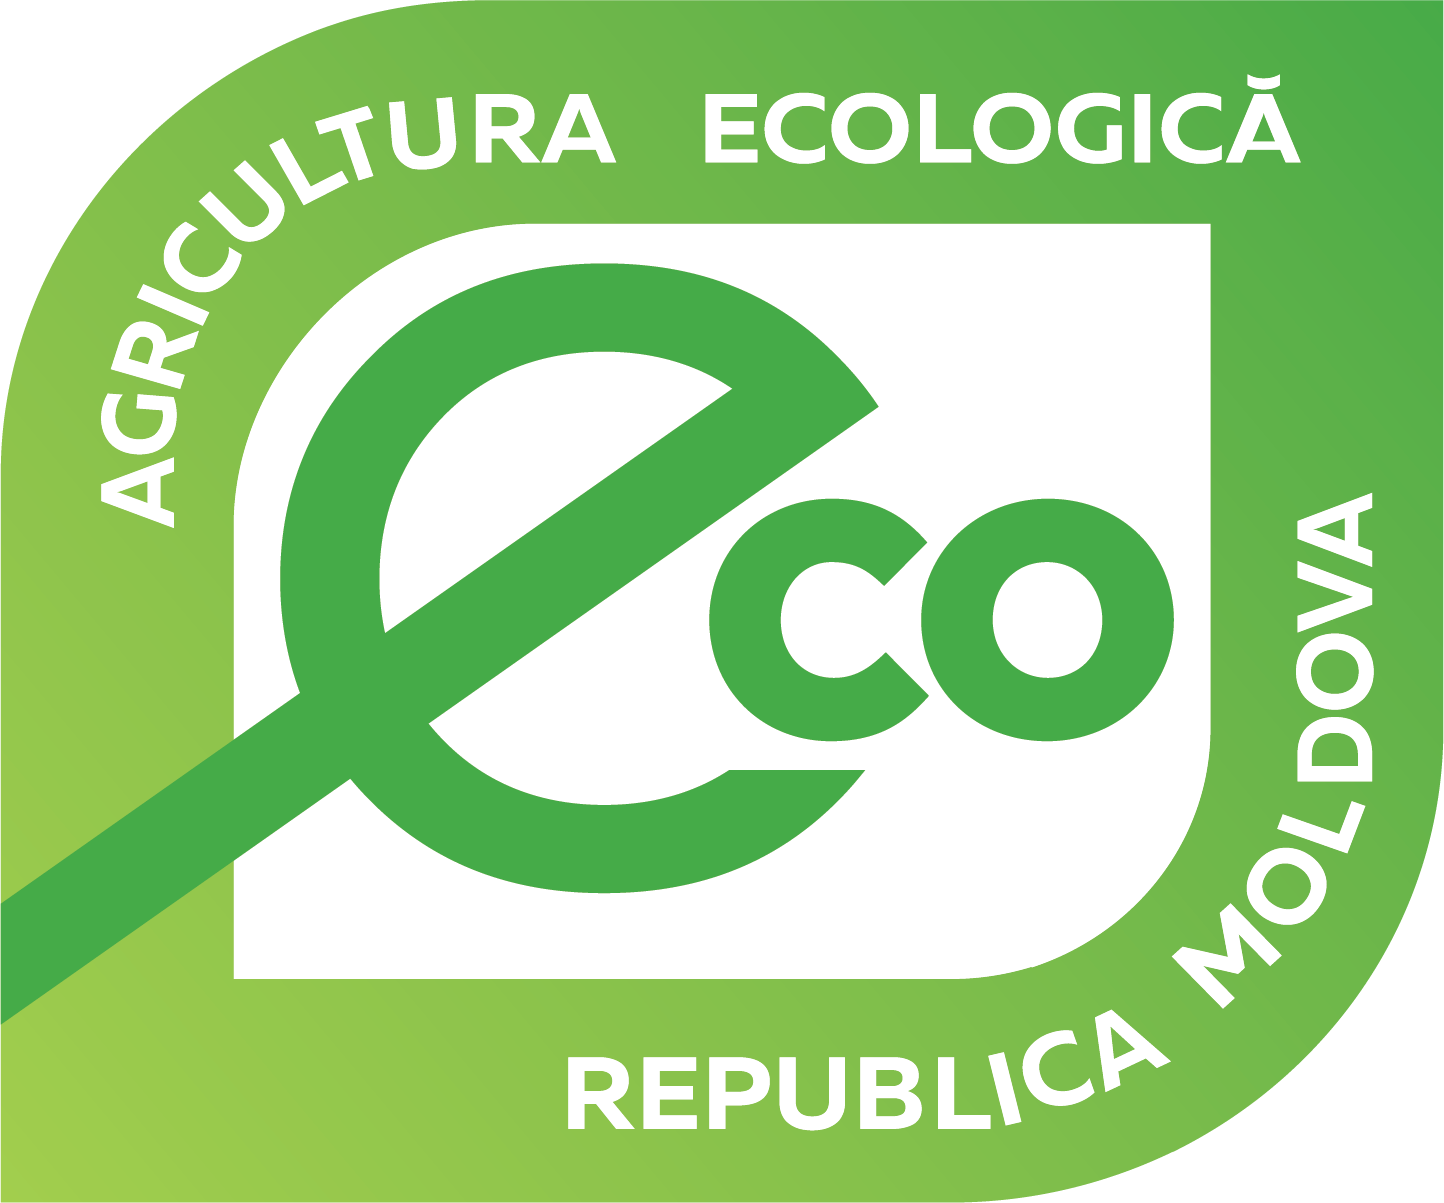 agricultura ecologica update